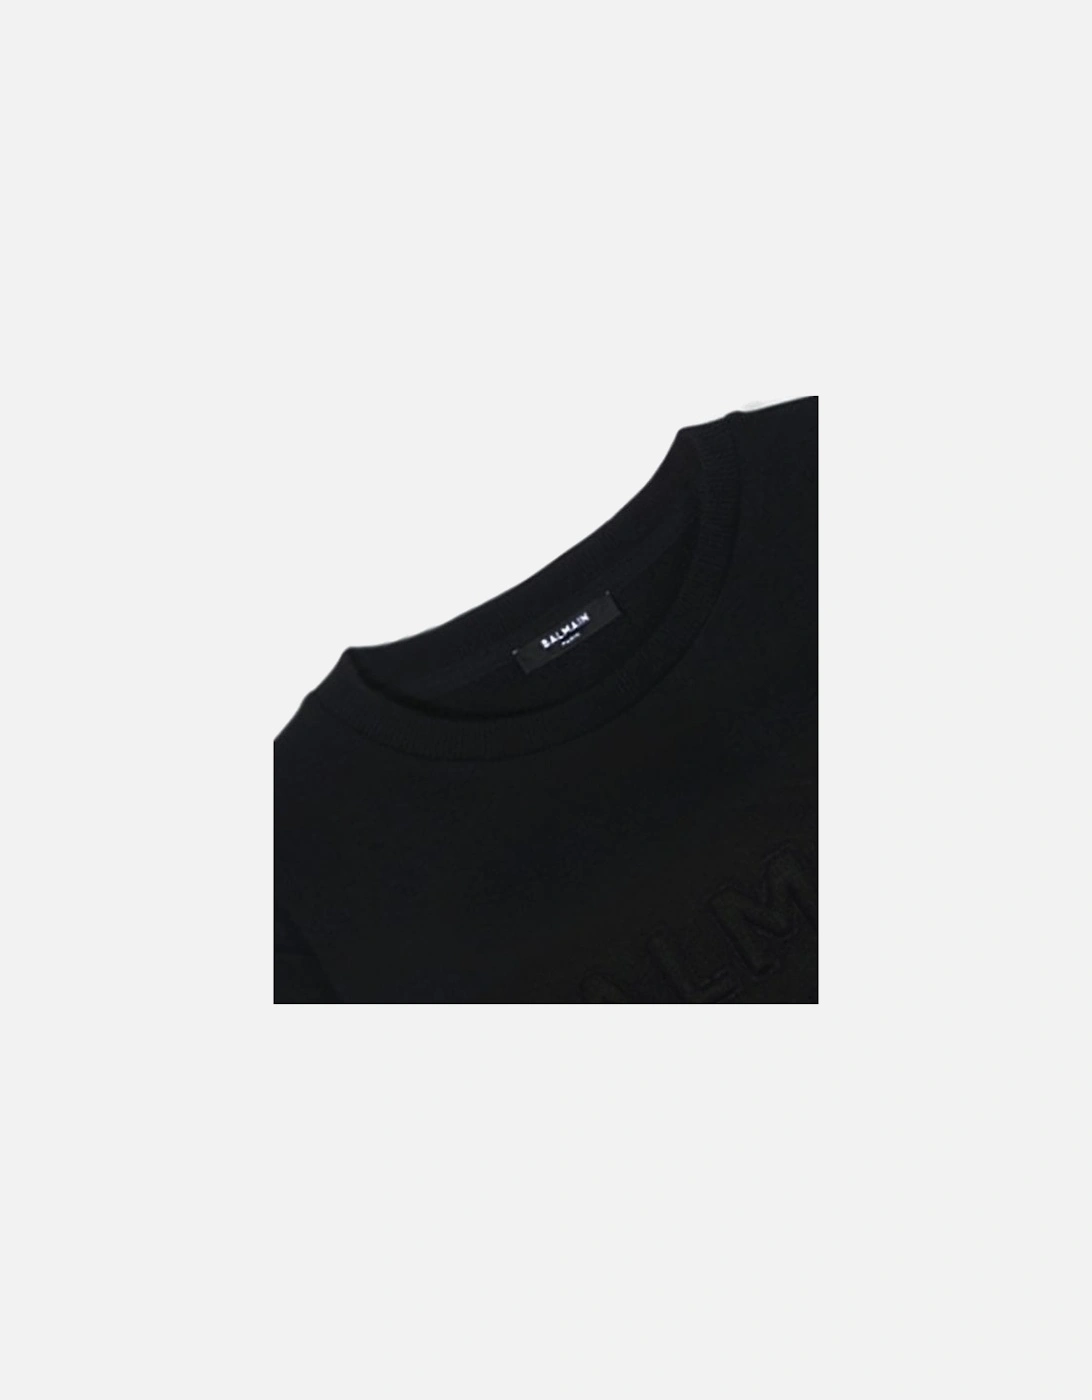 Boys Embossed Logo Sweatshirt Black